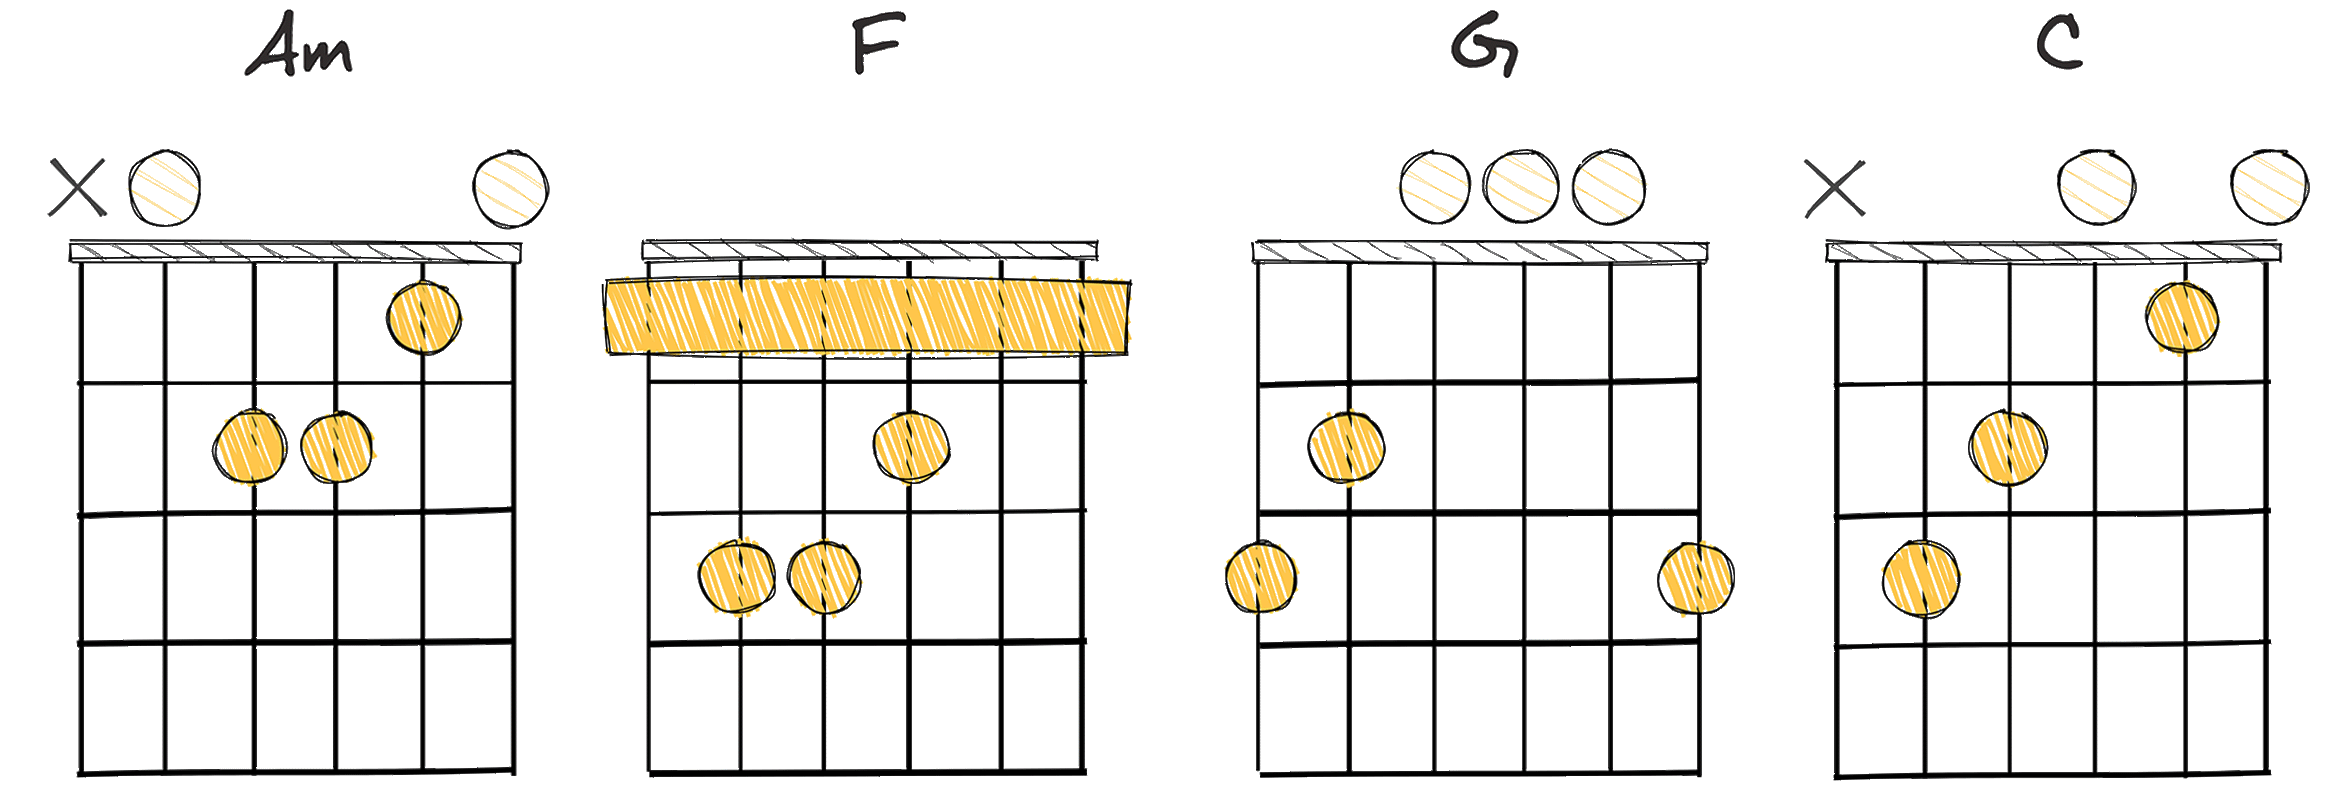 vi-IV-V-I (6-4-5-1) chords diagram